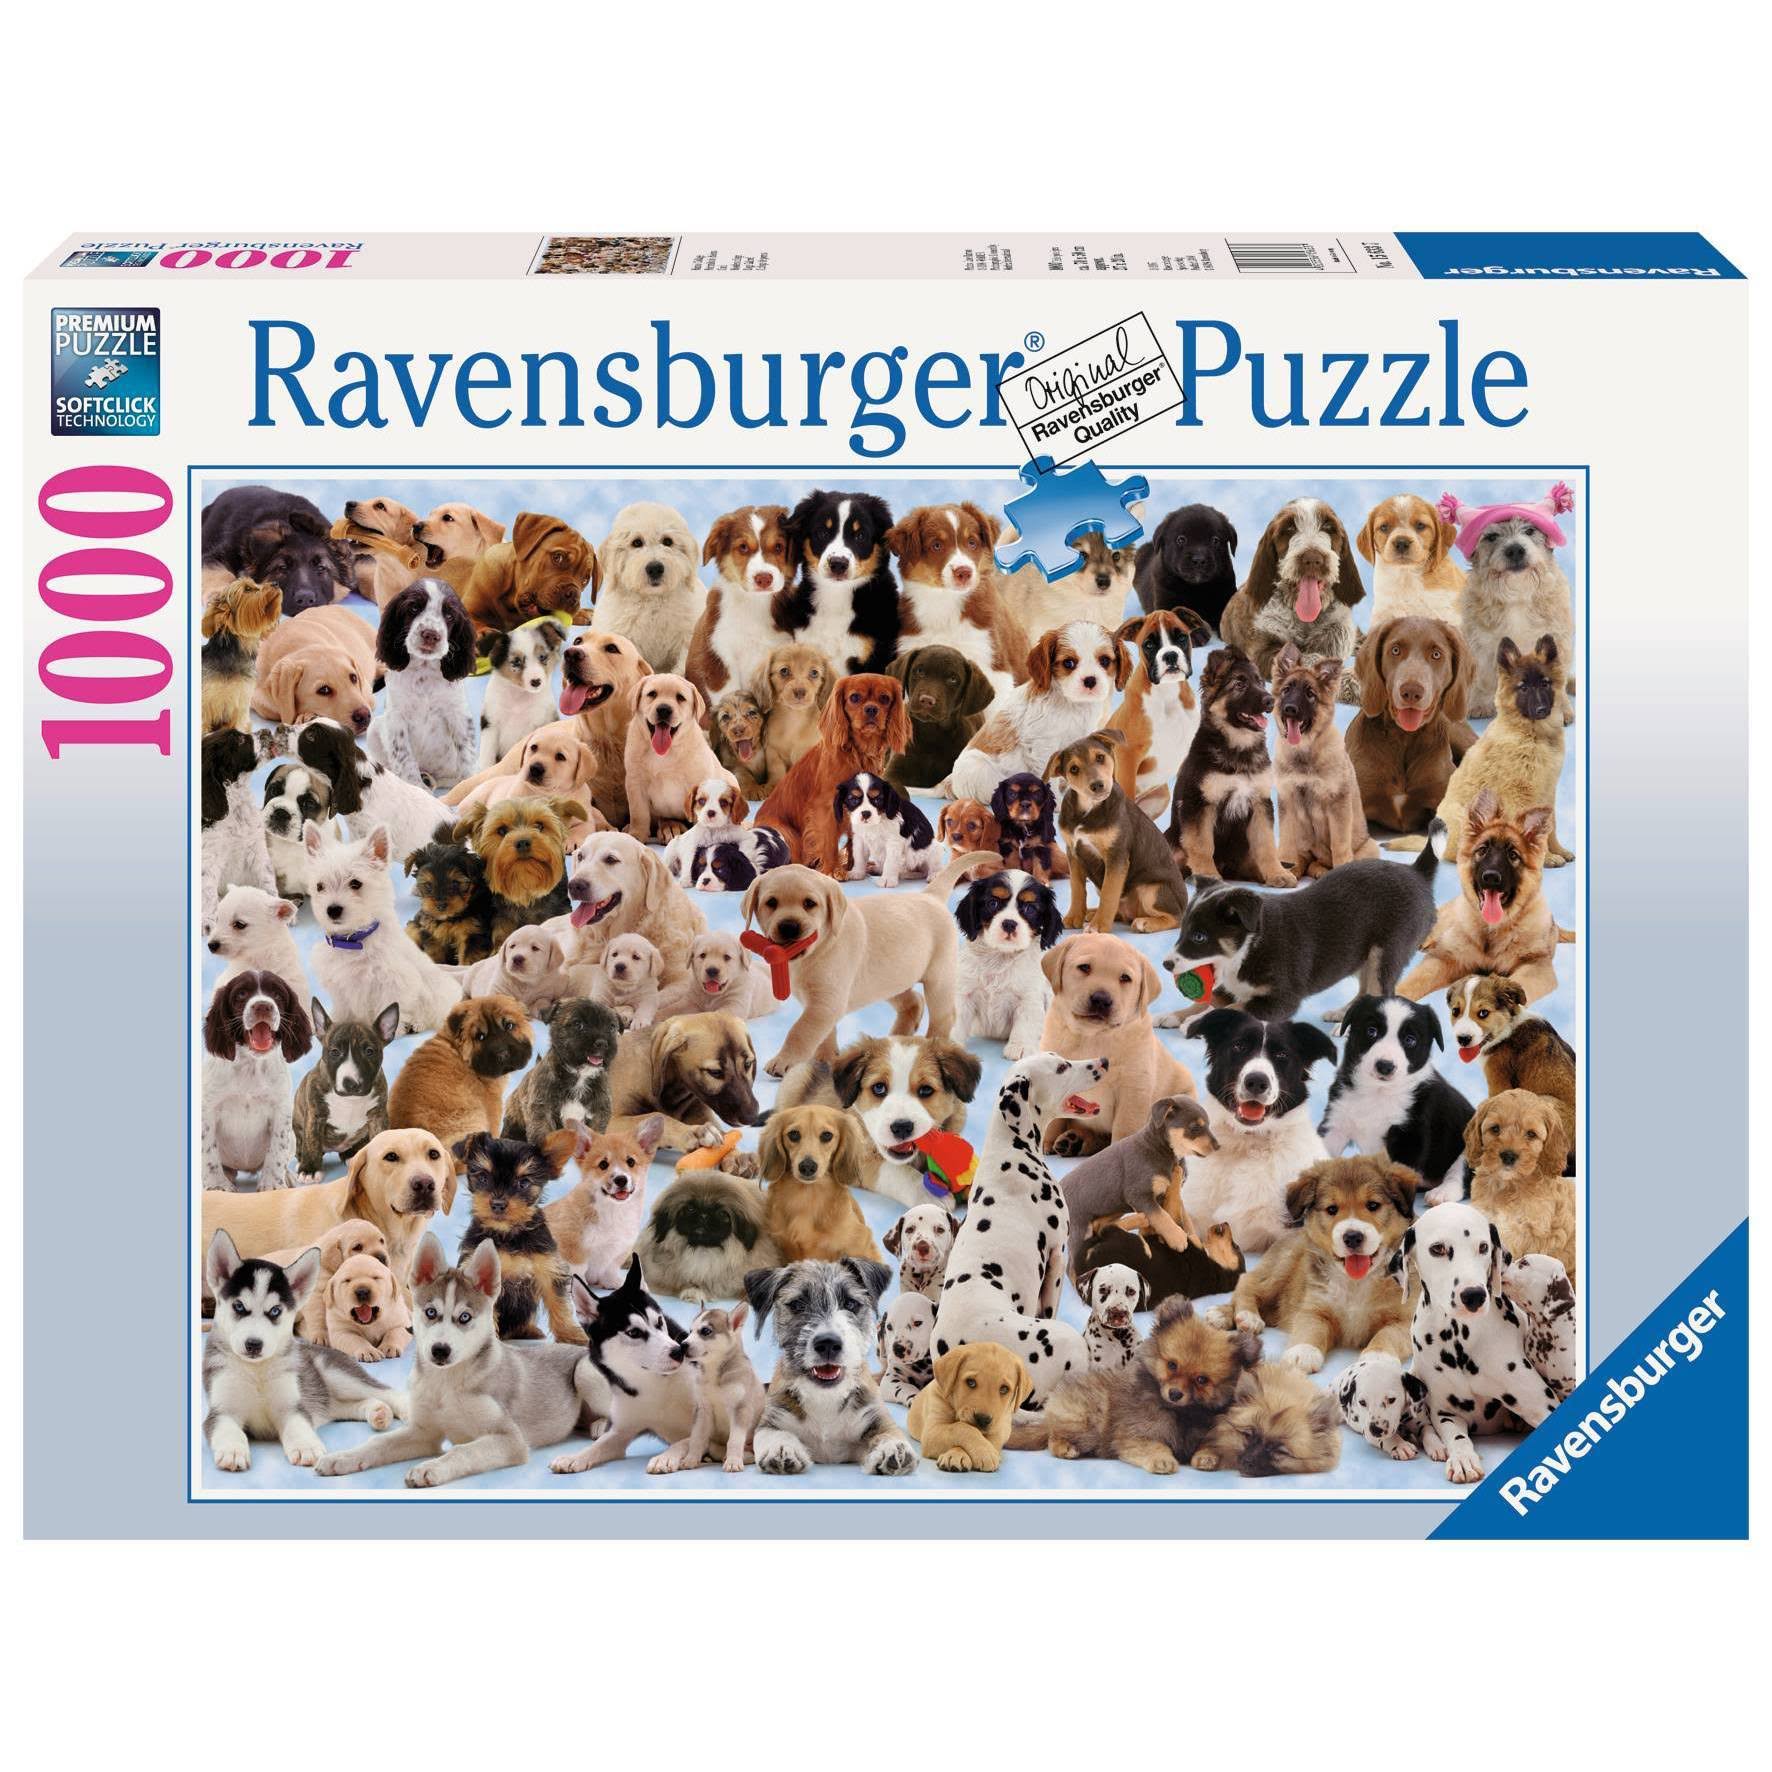 Ravensburger Dogs Galore! 1000 Piece Jigsaw Puzzle